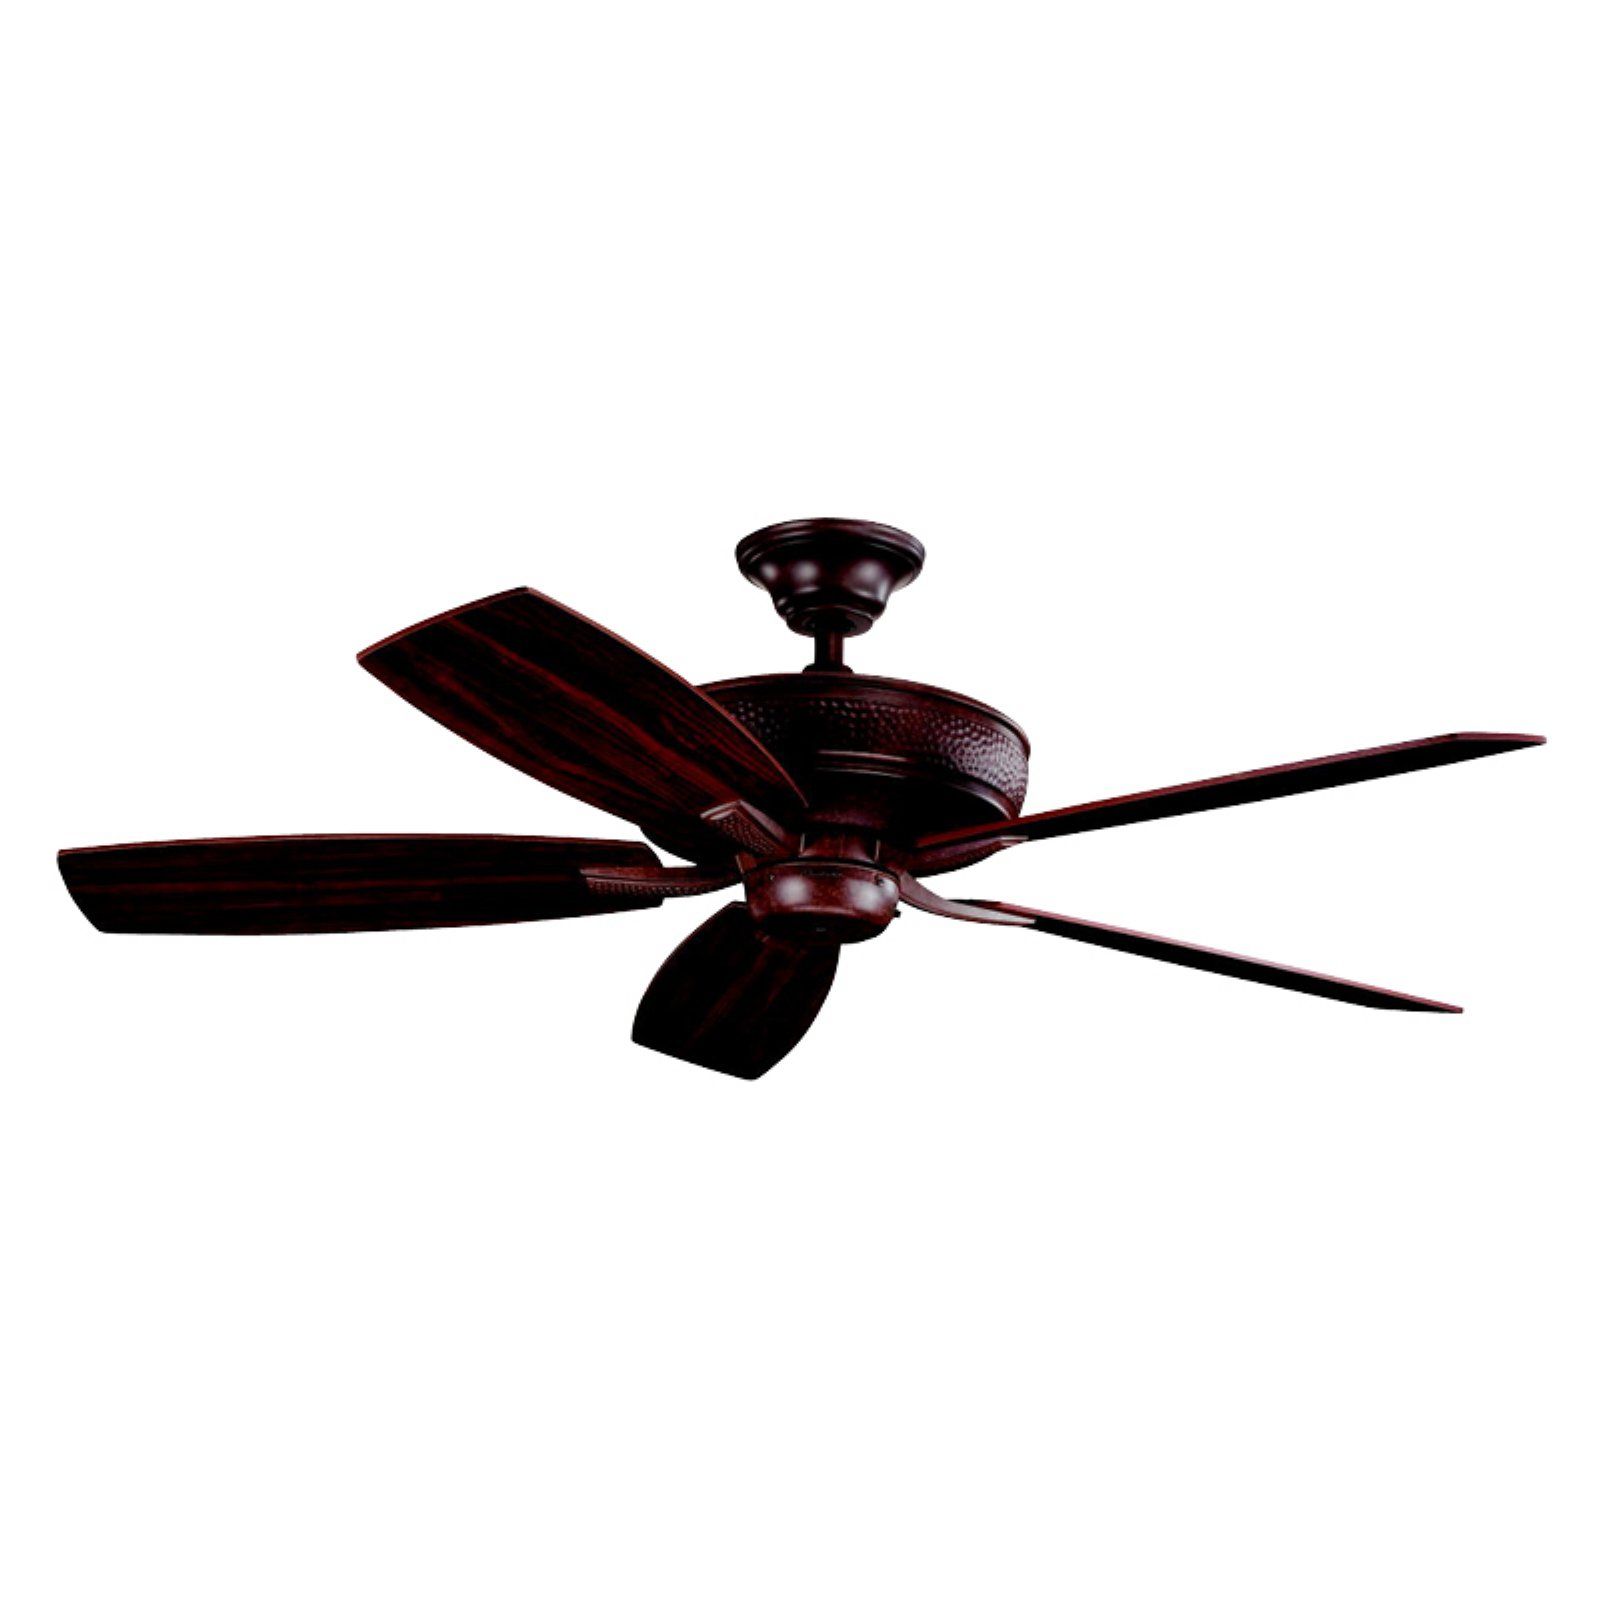 Kichler 339013obb Monarch Ii 52 In. Indoor Ceiling Fan In Popular Marcoux 5 Blade Ceiling Fans (Photo 10 of 20)